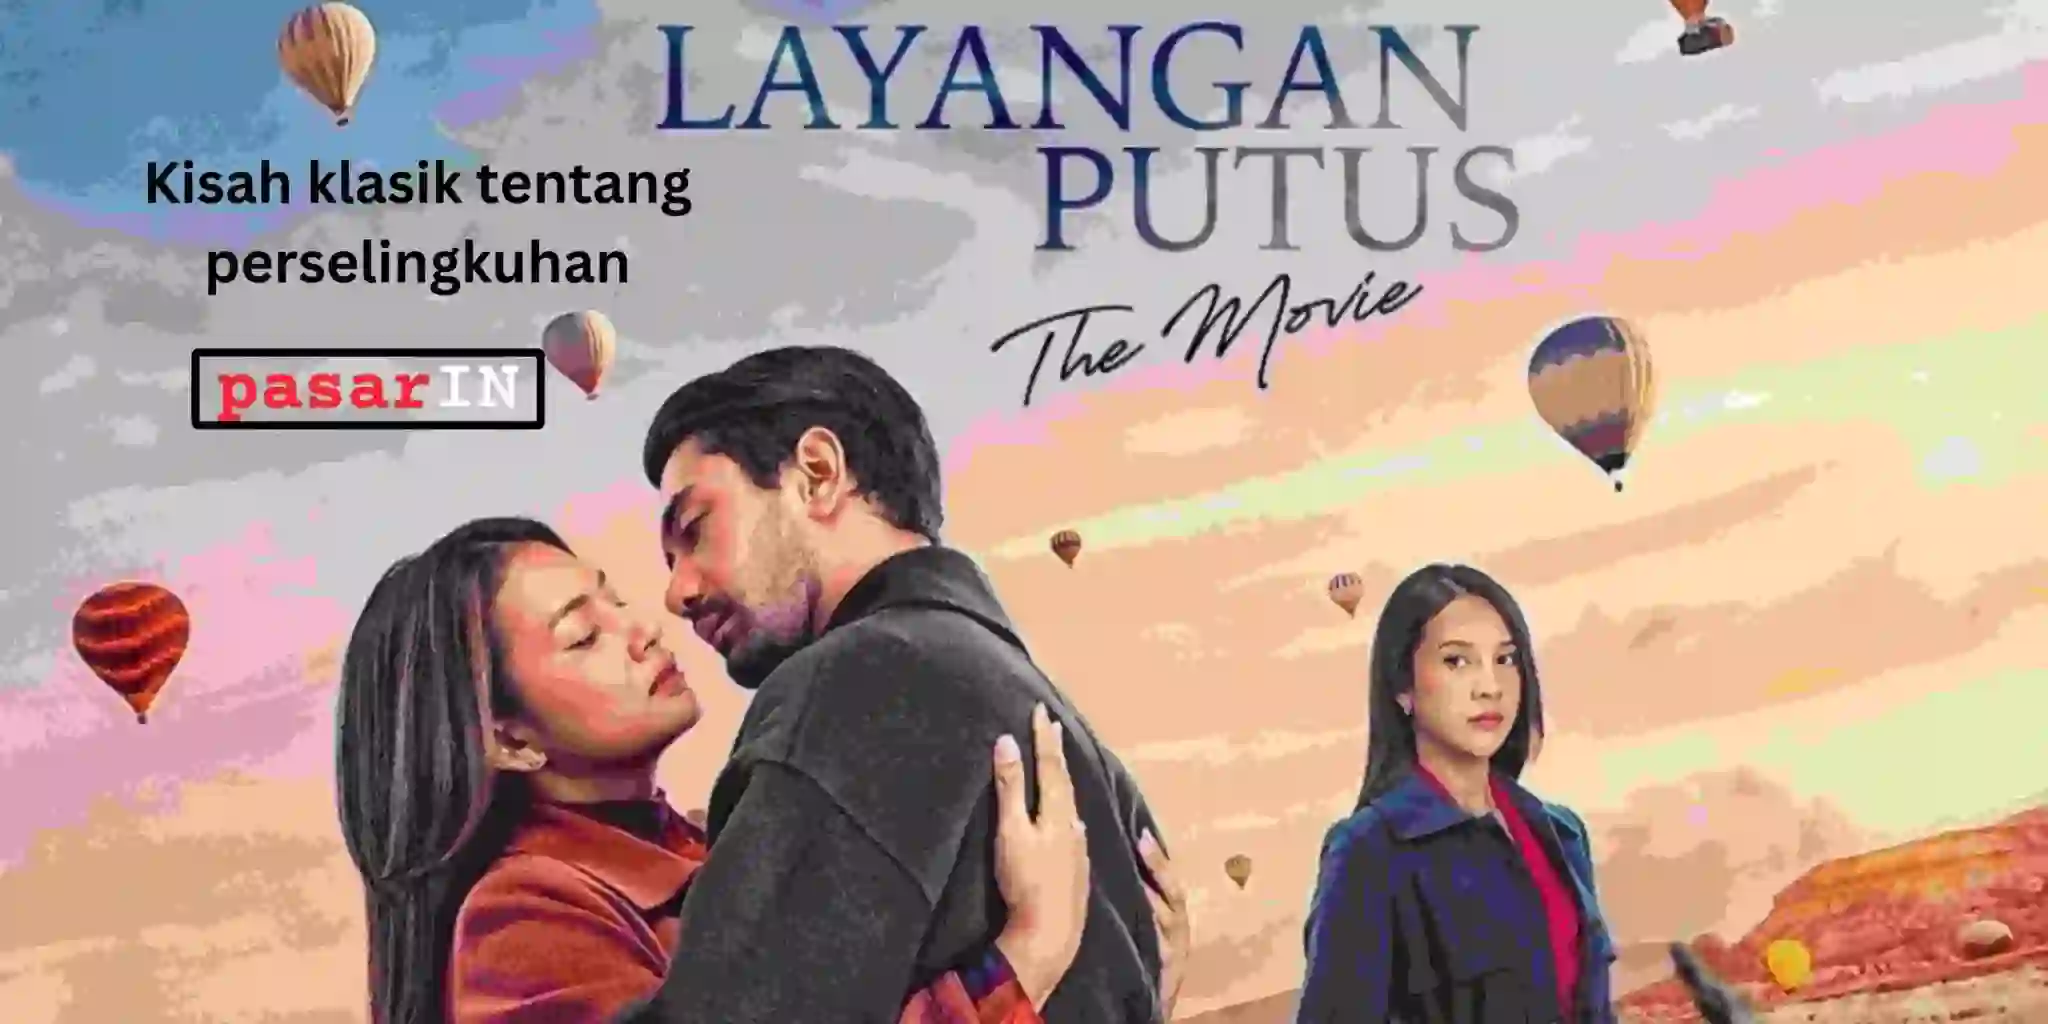 Layangan Putus the Movie: Review Digital Marketing